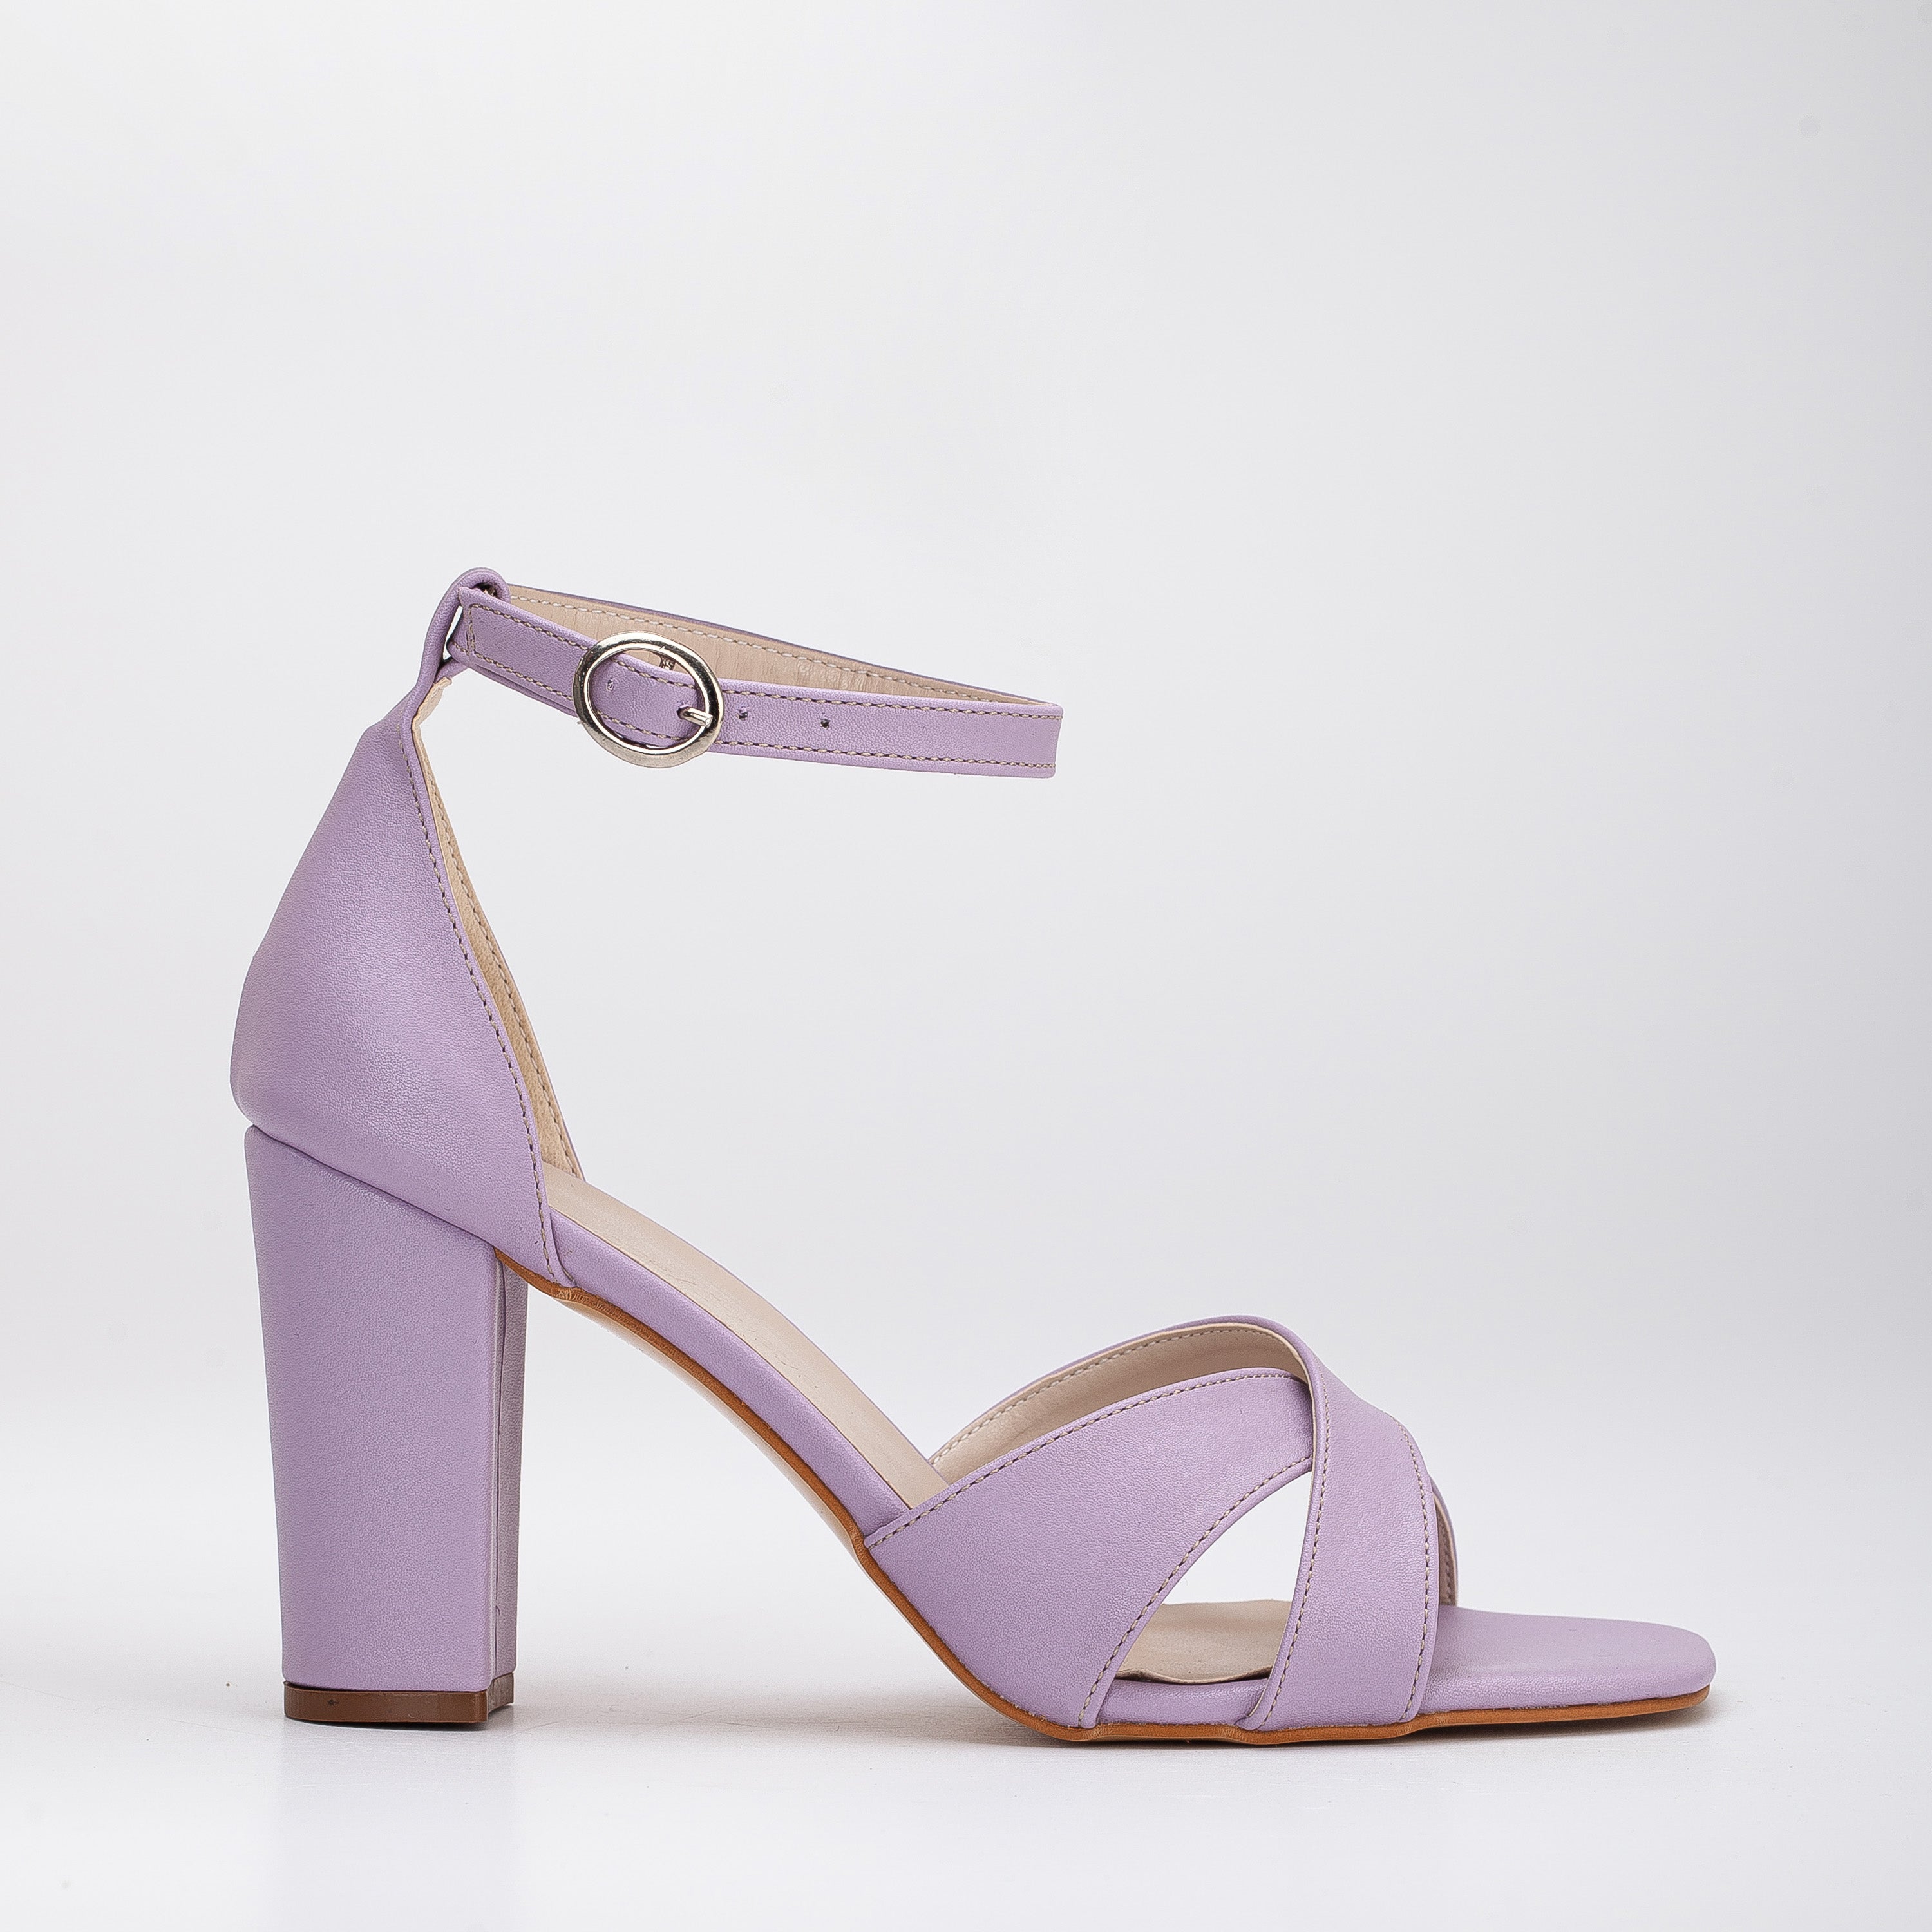 Aldo women's shoes size 38(7.5) leather suede platform 5.5 inch heels  lavender | eBay